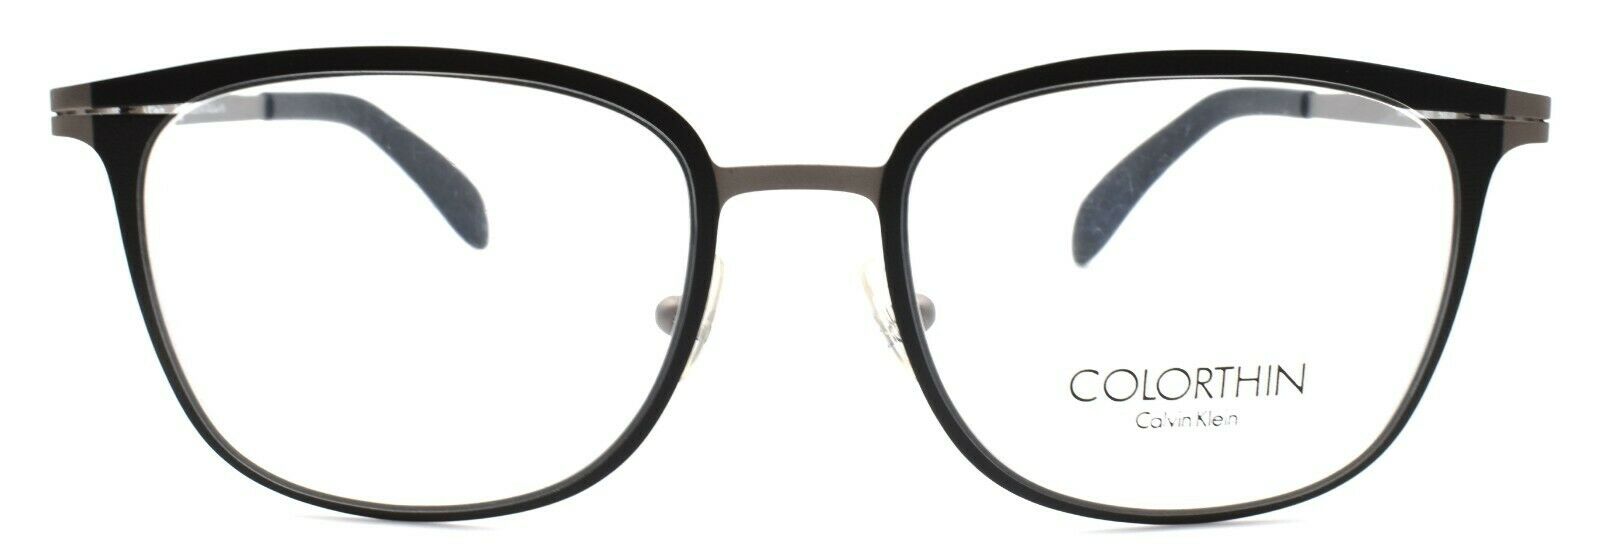 2-Calvin Klein CK5425 001 Women's Eyeglasses Frames 50-18-135 Black ITALY-750779094211-IKSpecs